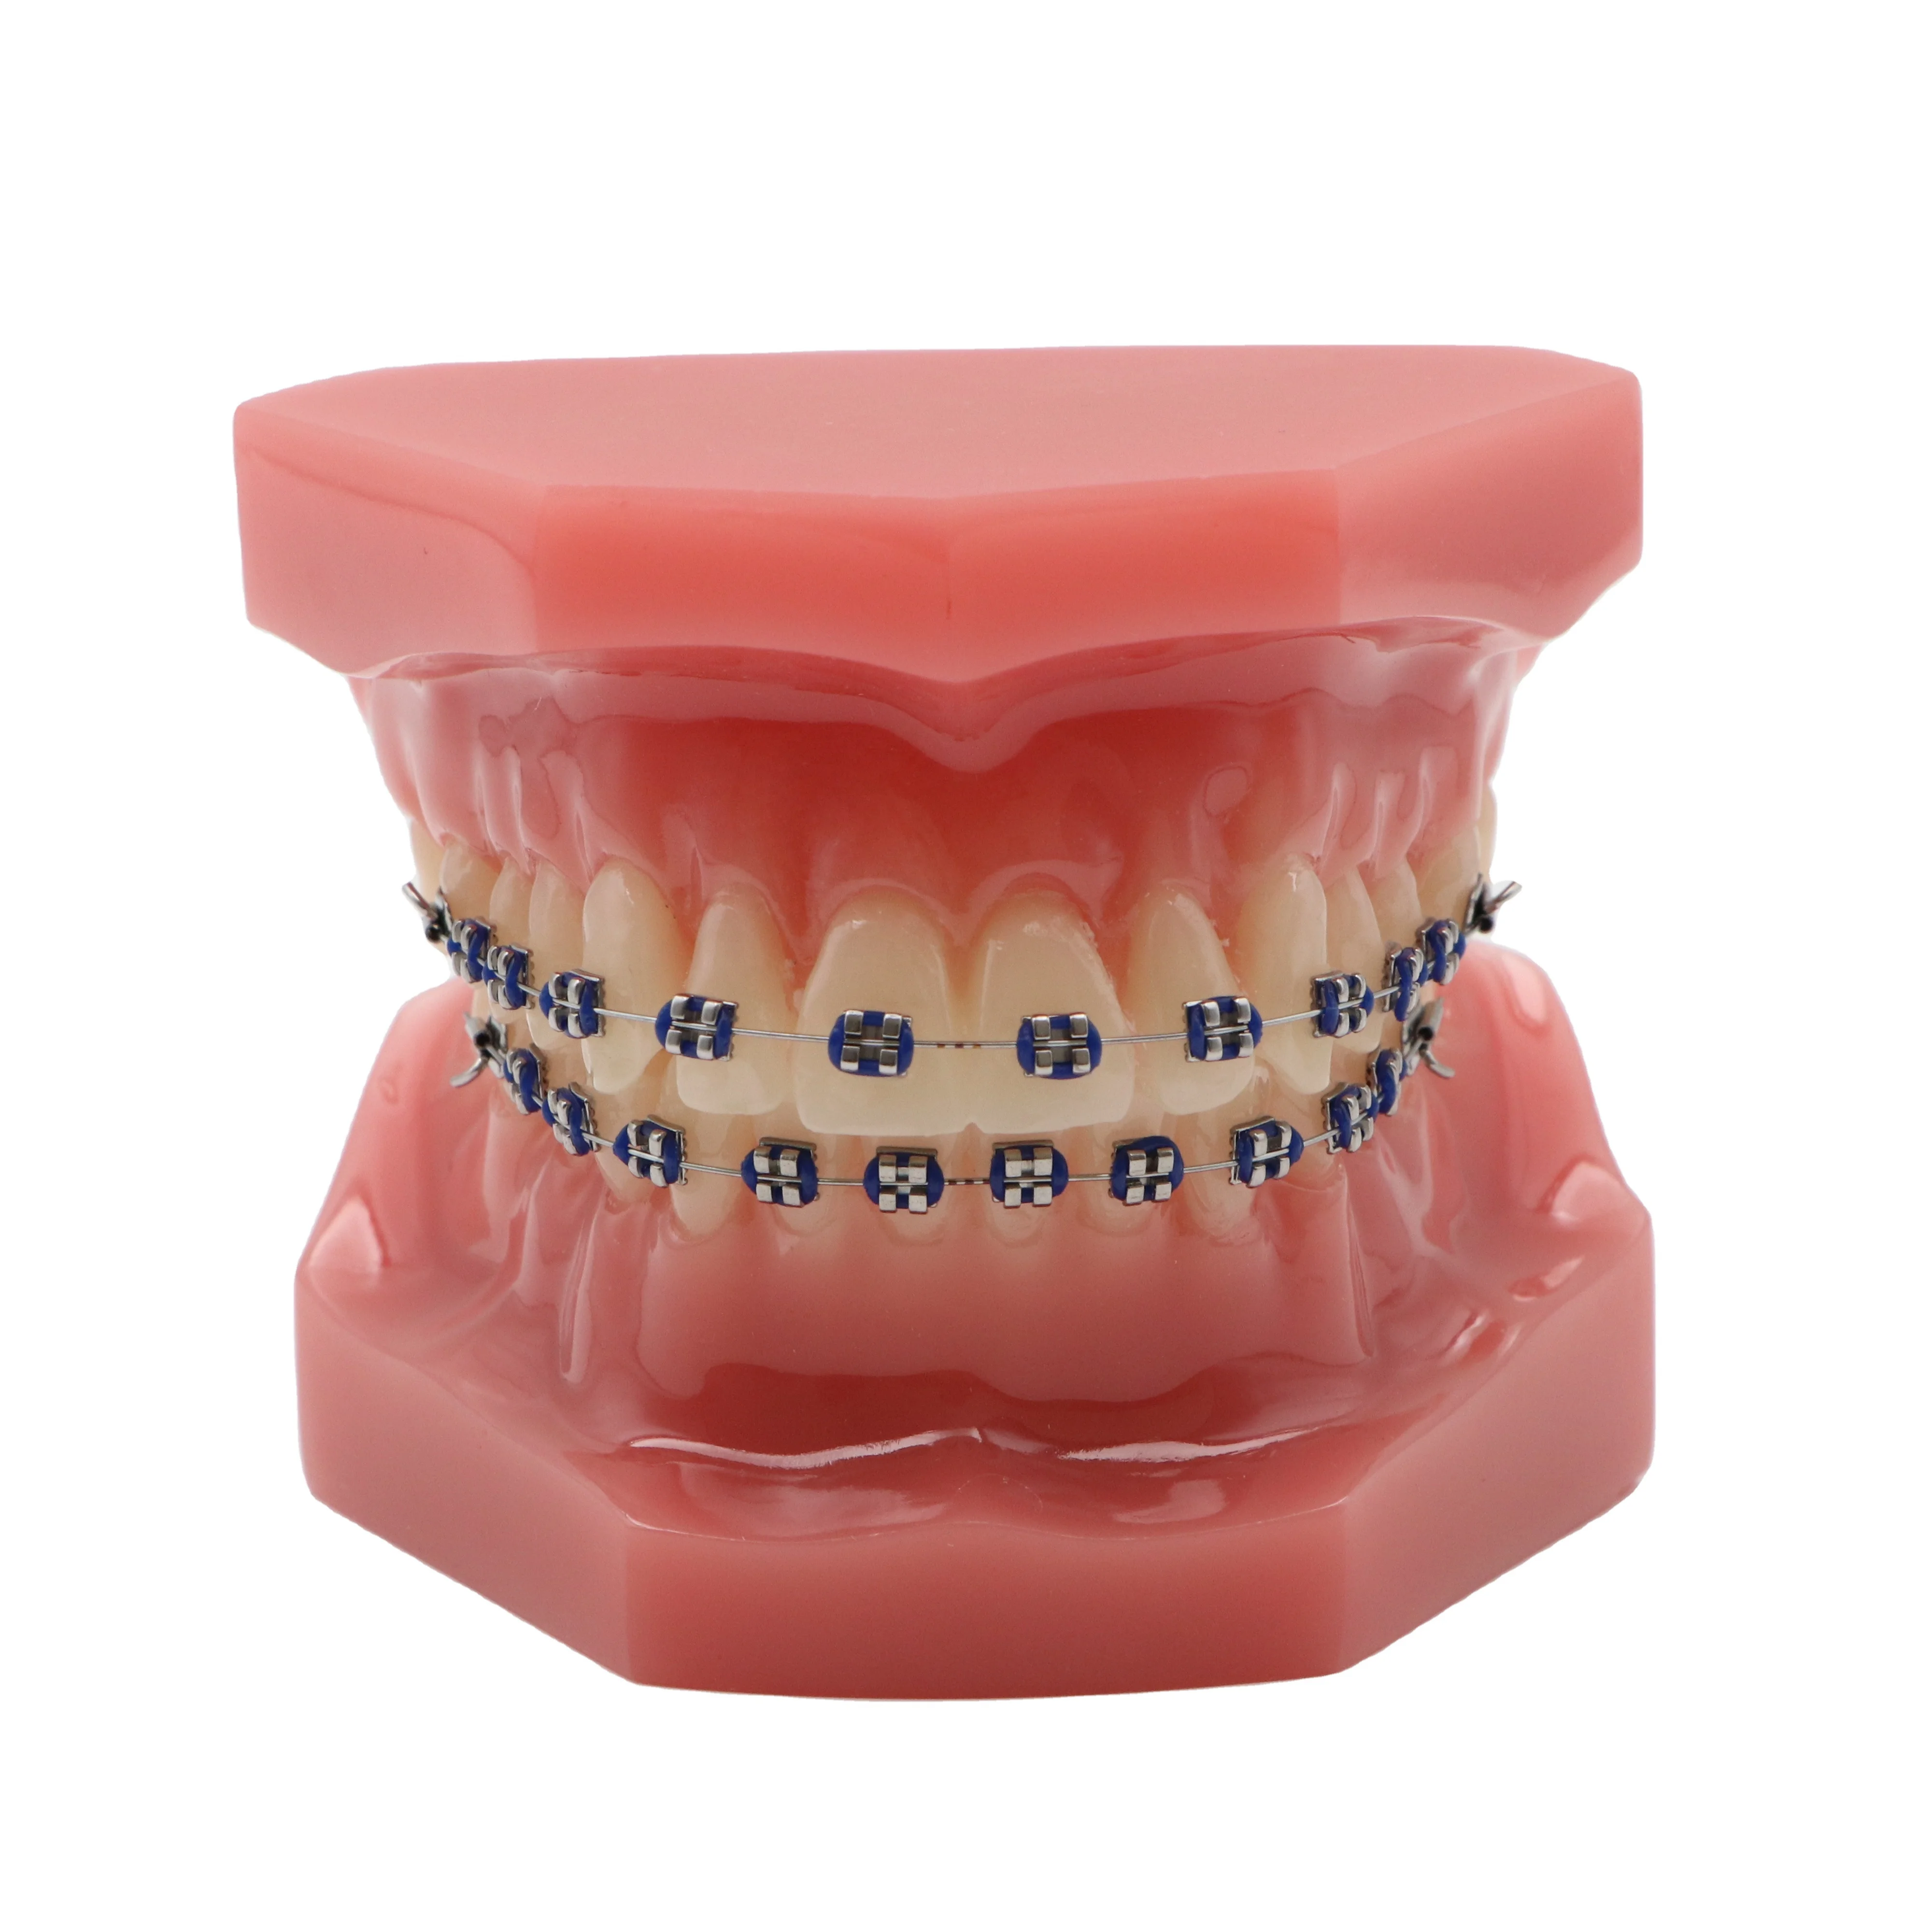 dental jaws and teeth models for dental education